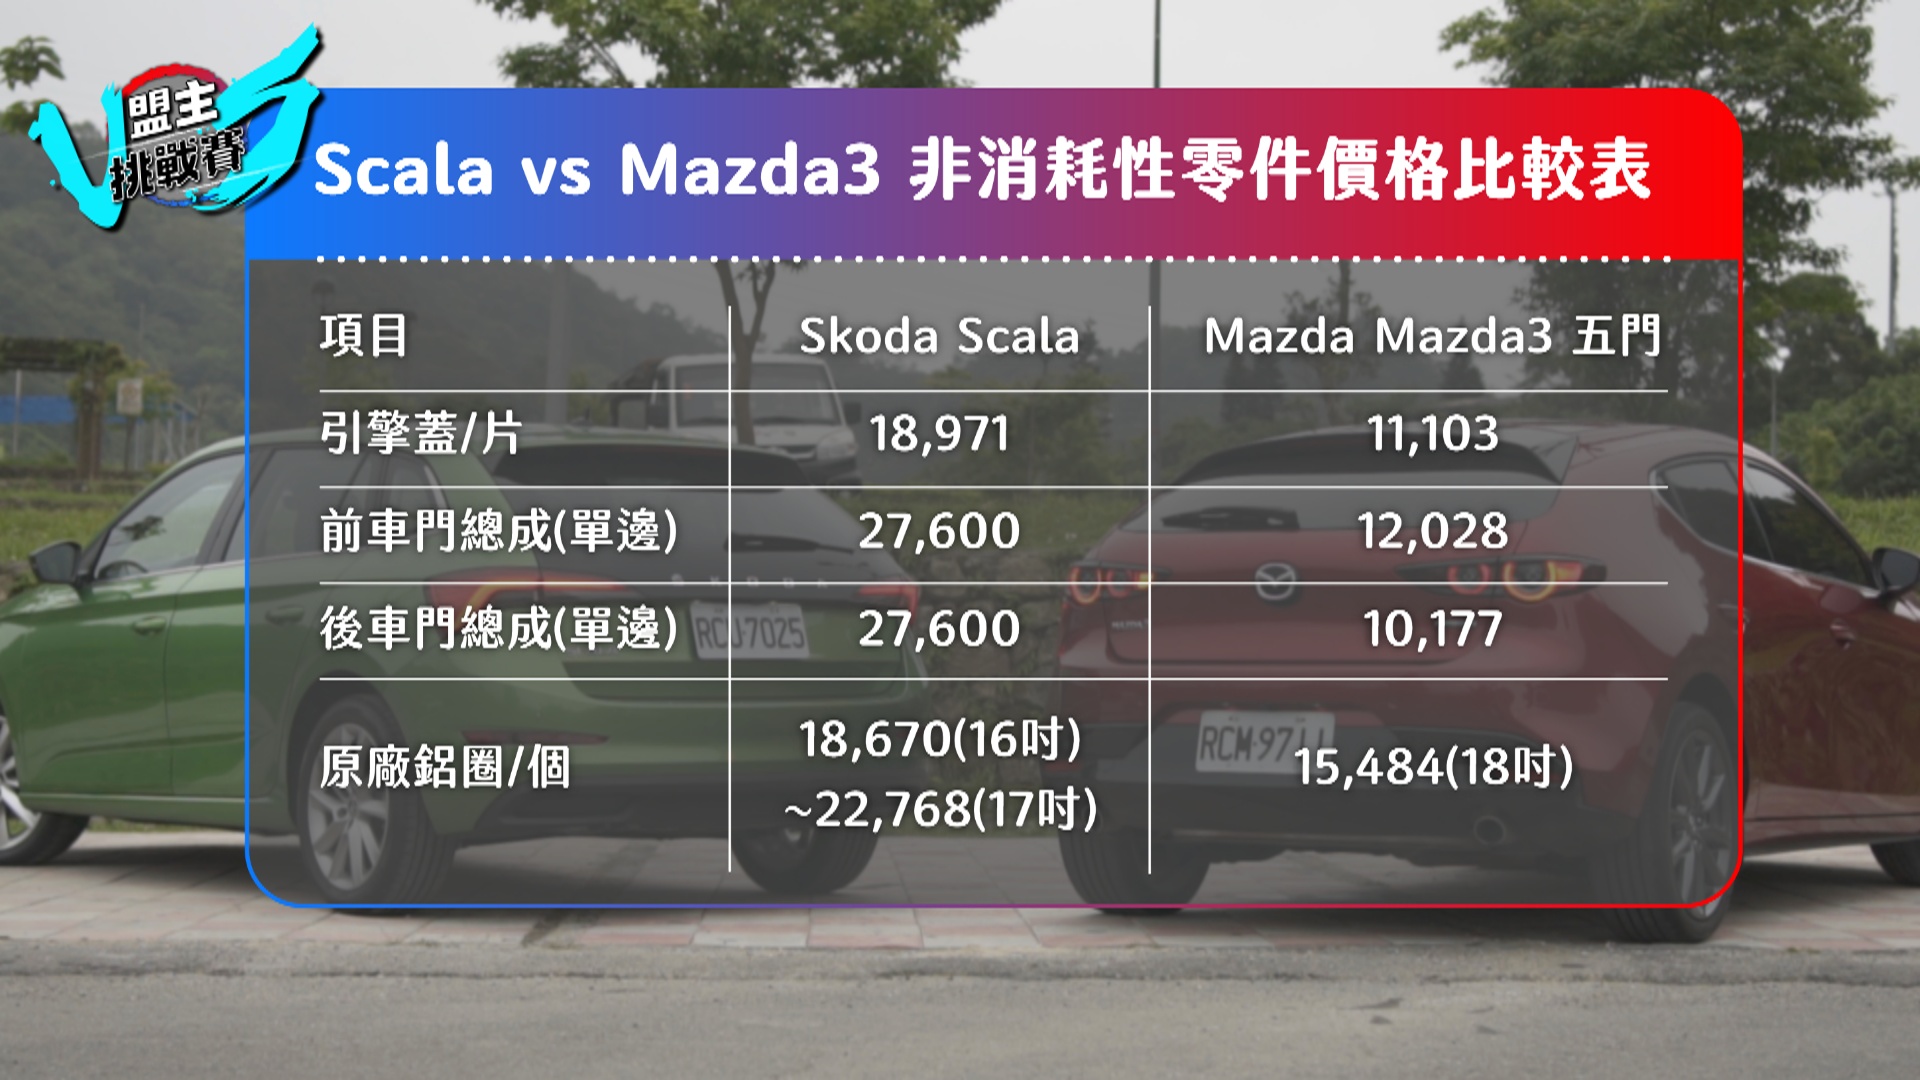 Mazda3 的鋁圈 18 吋竟然還比 Scala 的 16 或 17 吋還來得便宜。